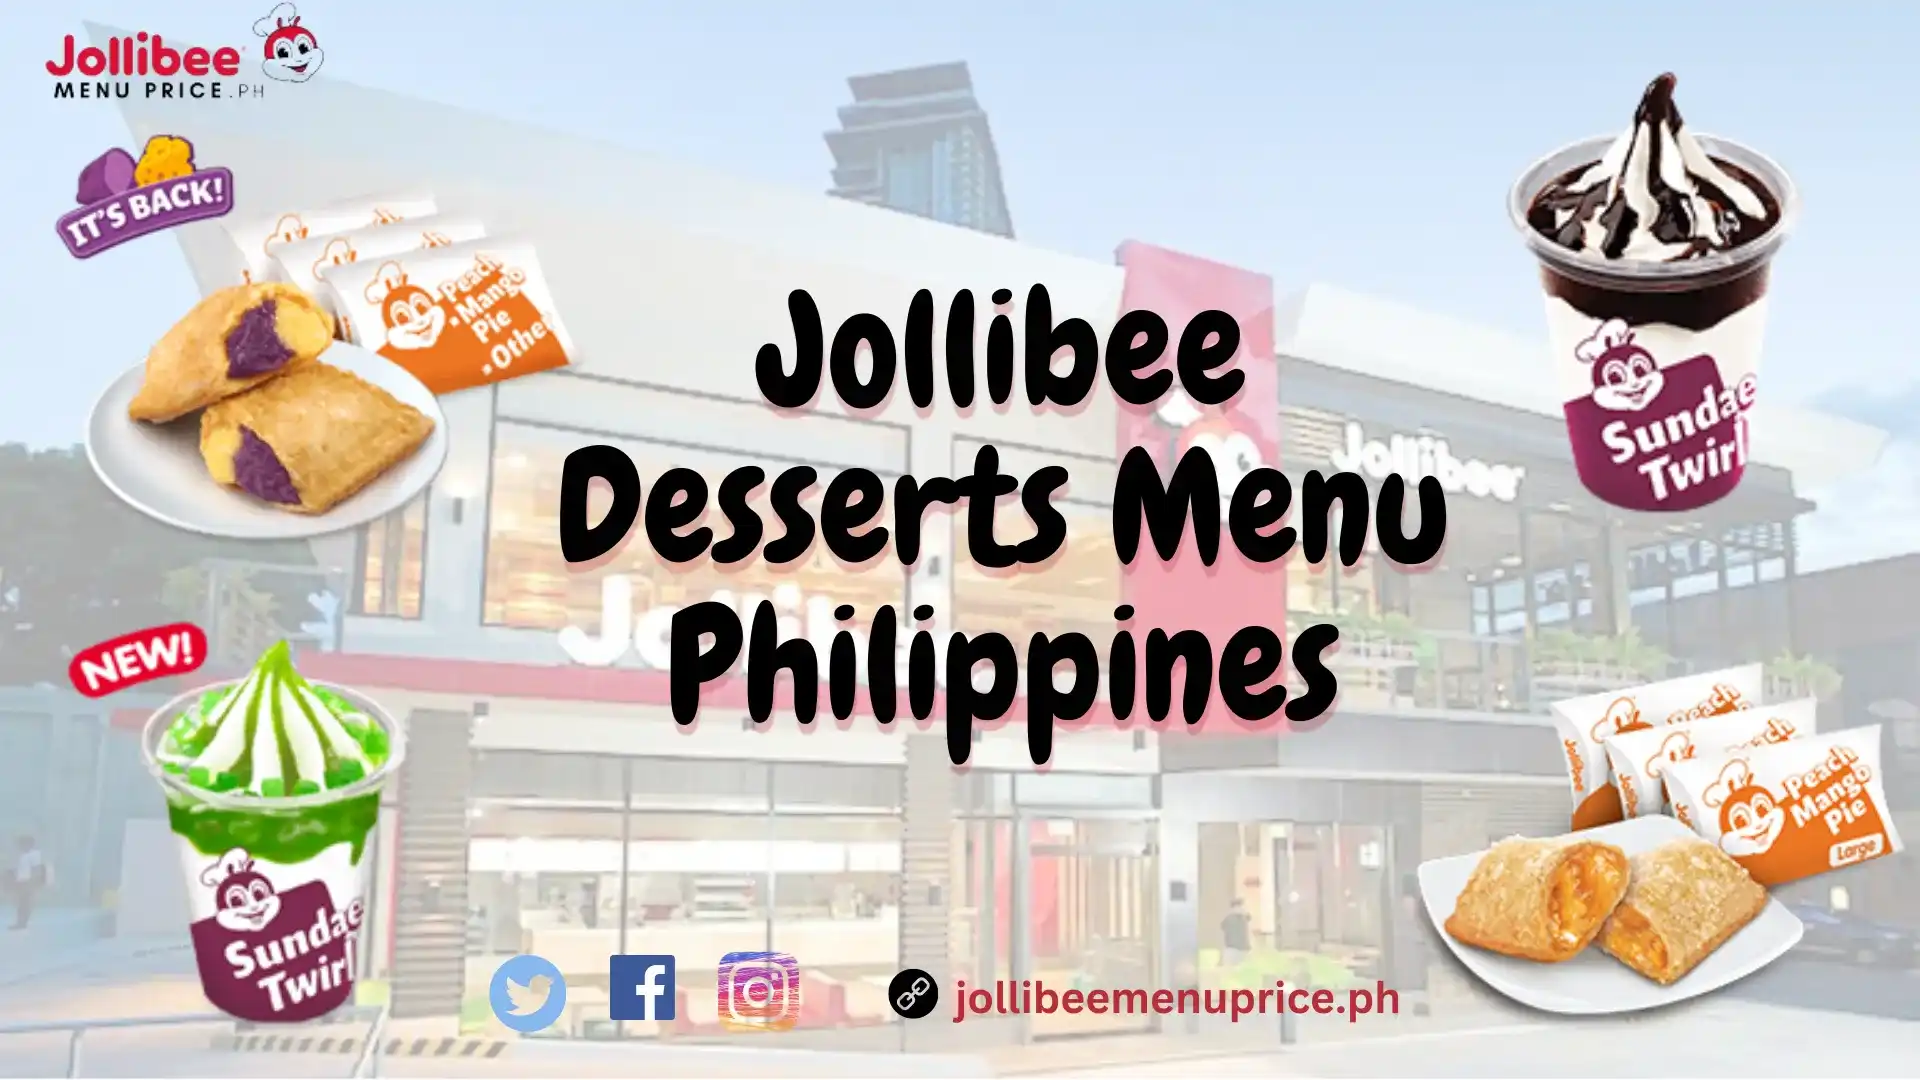 Jollibee Desserts menu